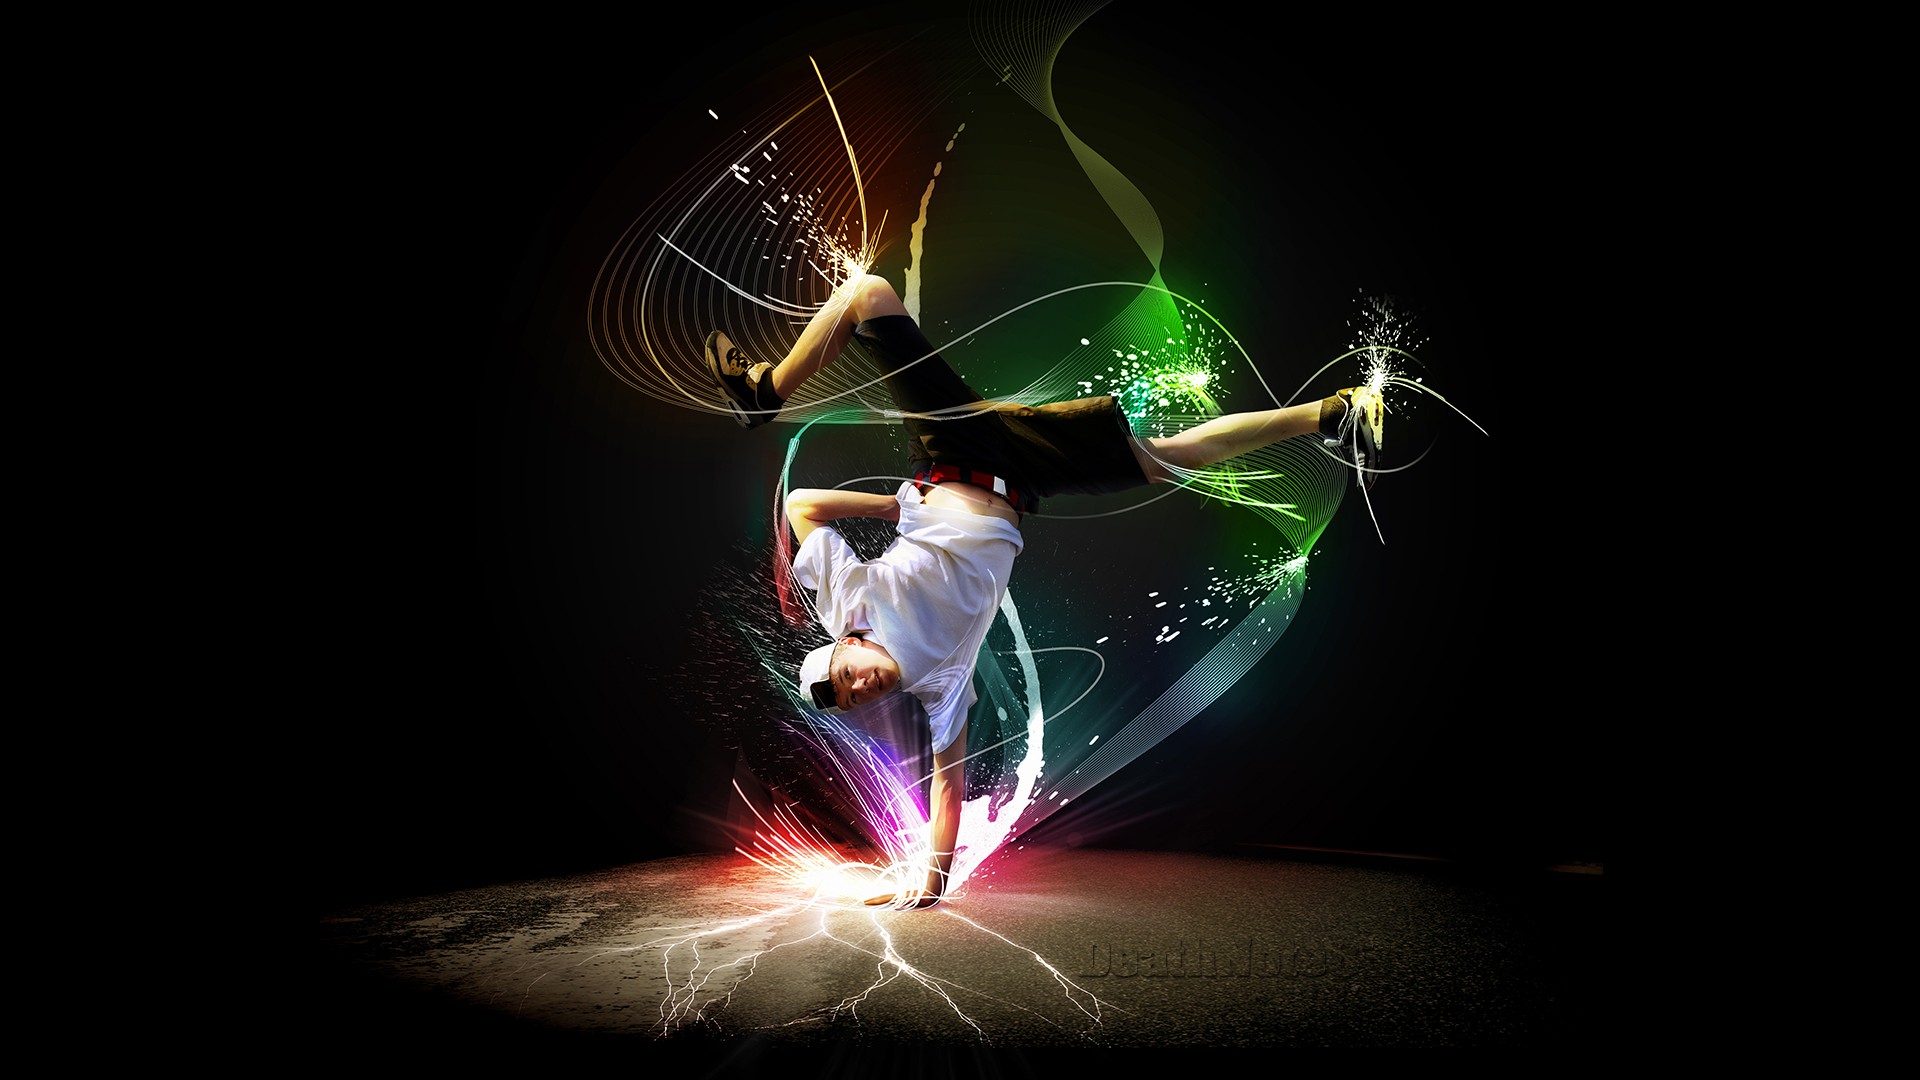 breakdance-full-hd-wallpaper-for-desktop-background-download-breakdance-images